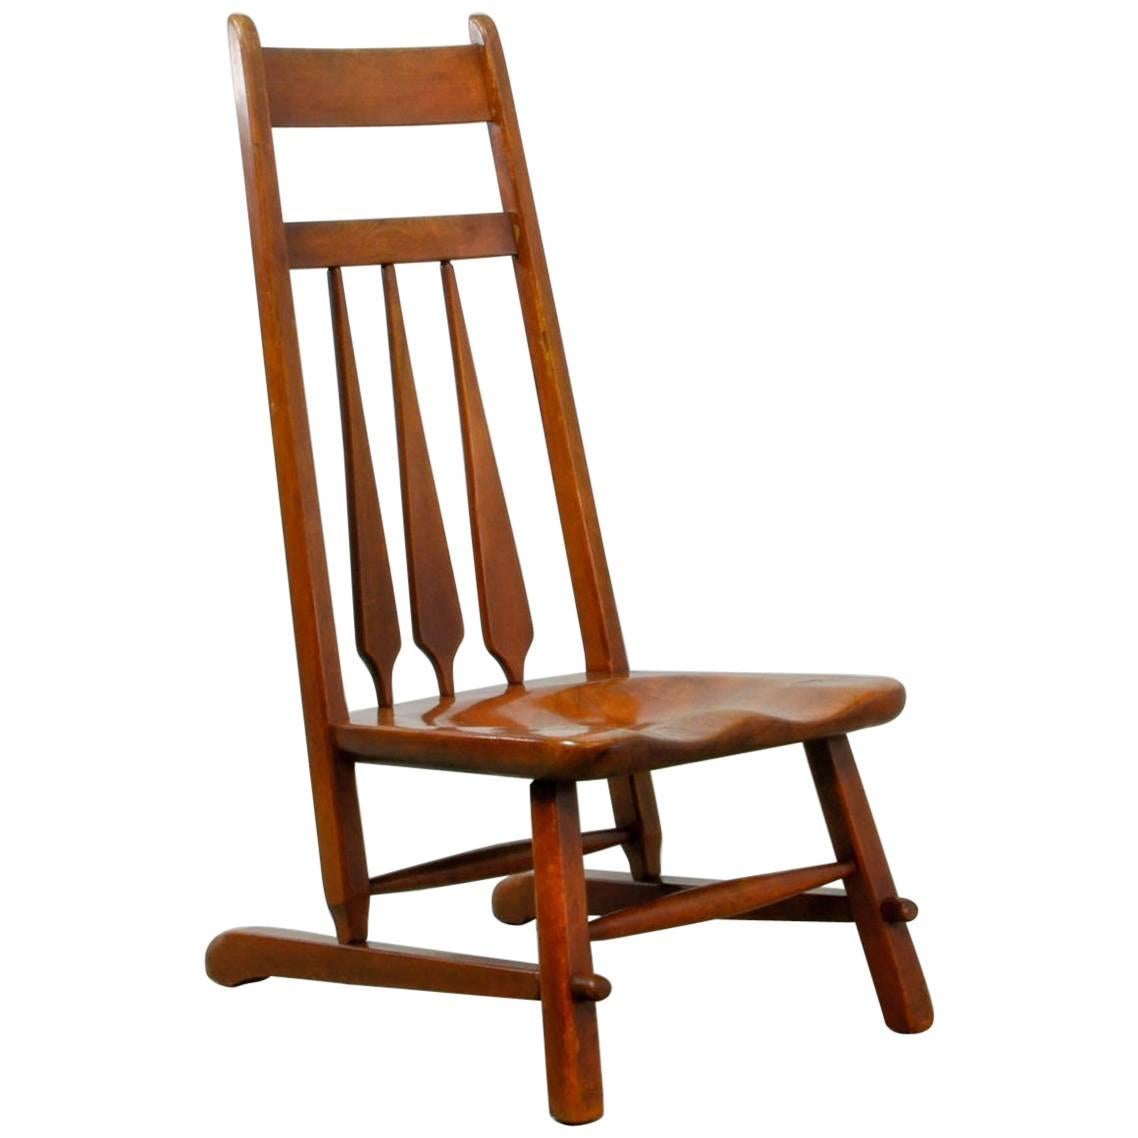 Original Solid Maple Cushman Side Chair Designed by Herman de Vries, 1930s